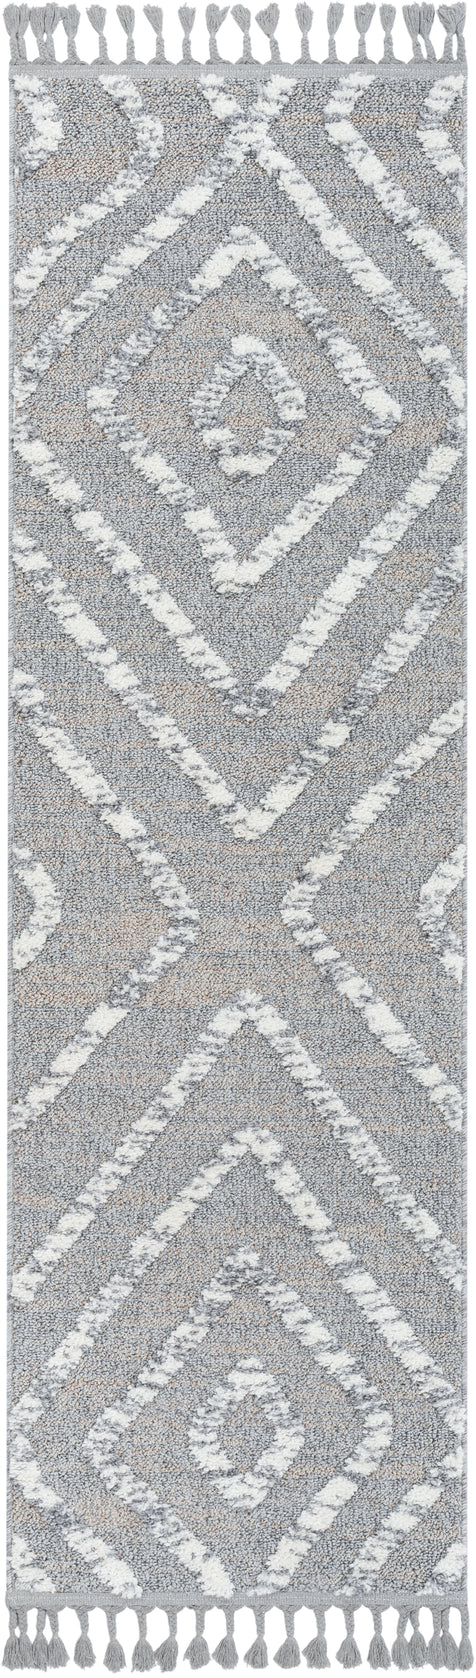 Willow Moroccan Lattice Trellis Grey High-Low Textured Rug